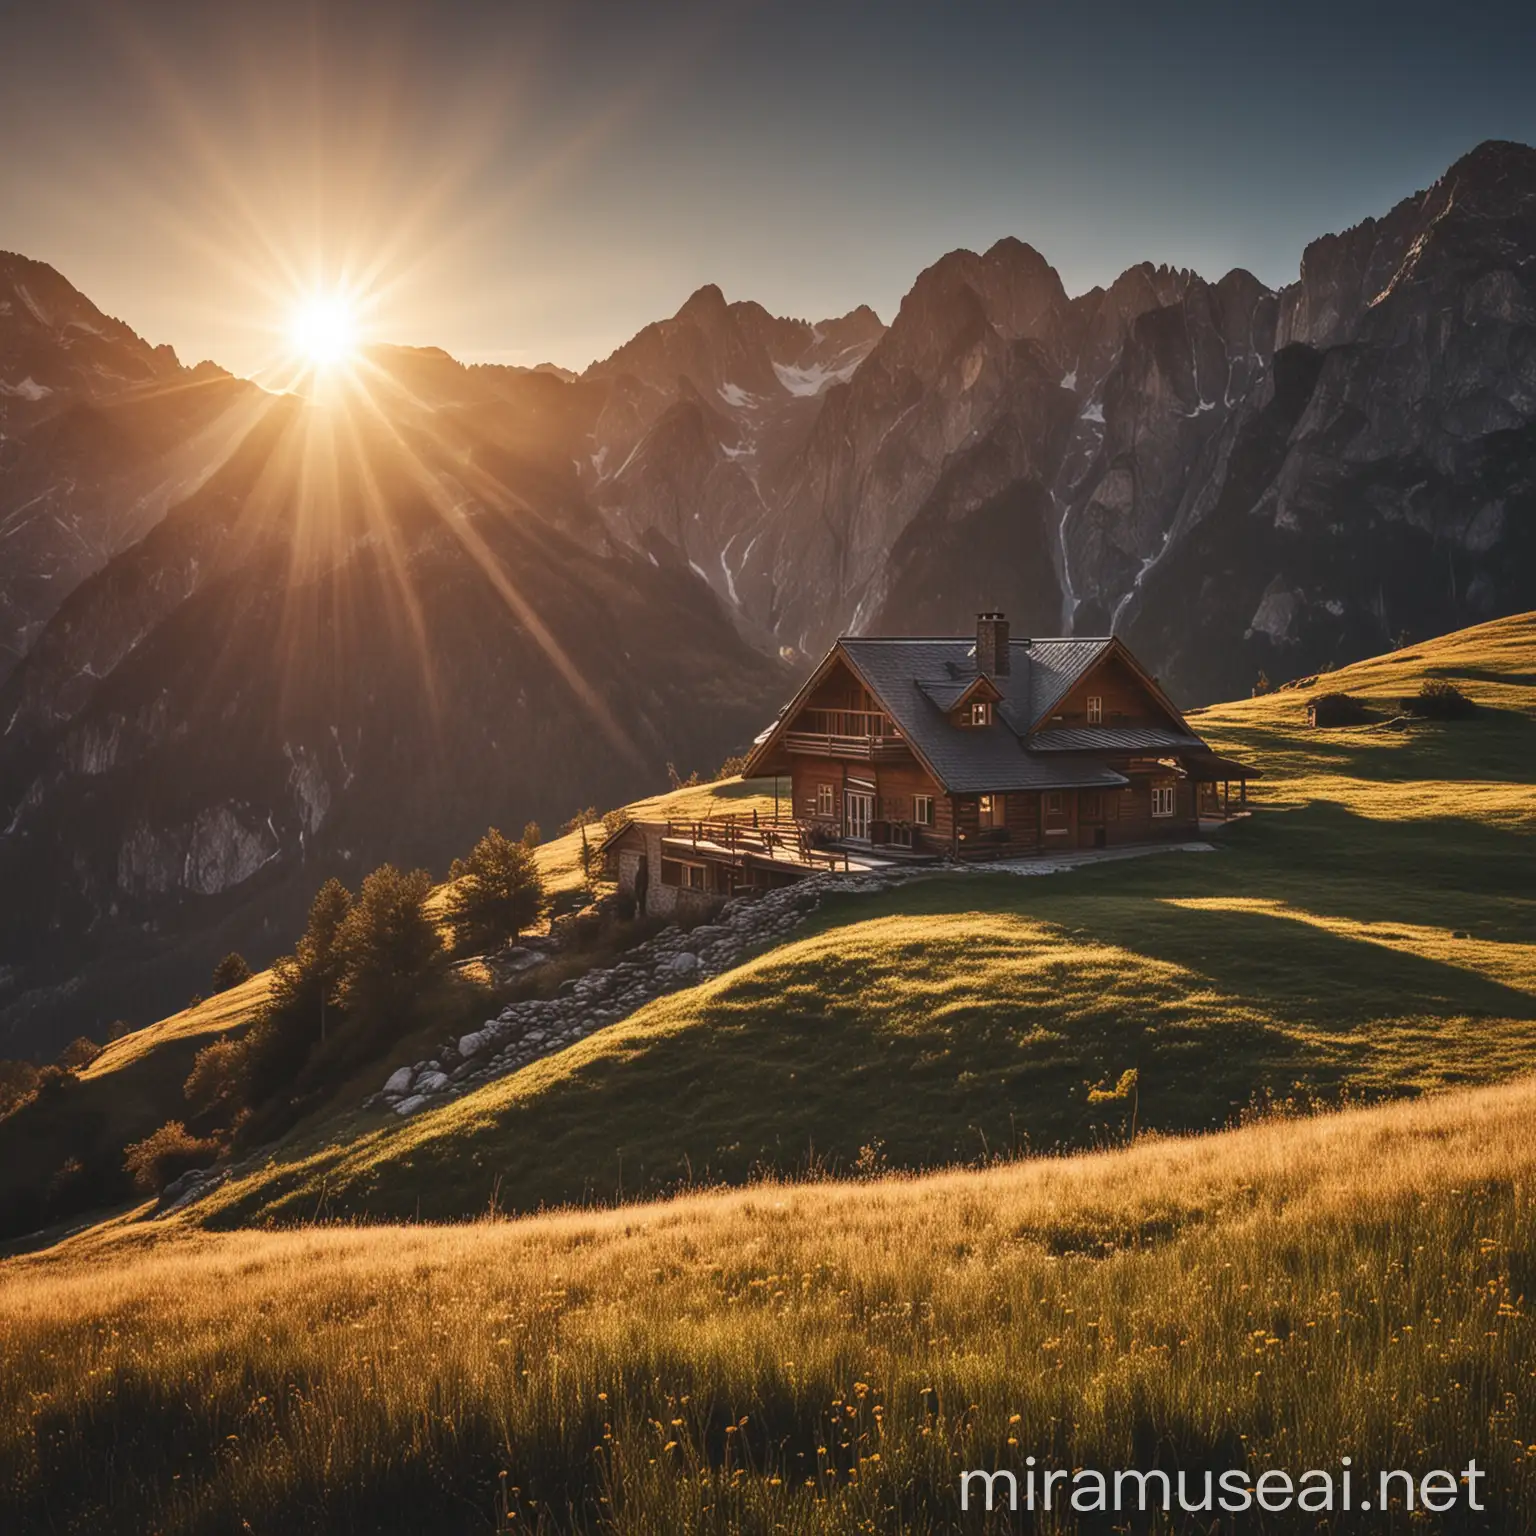 Sunlit Mountain House Amidst Serene Landscape